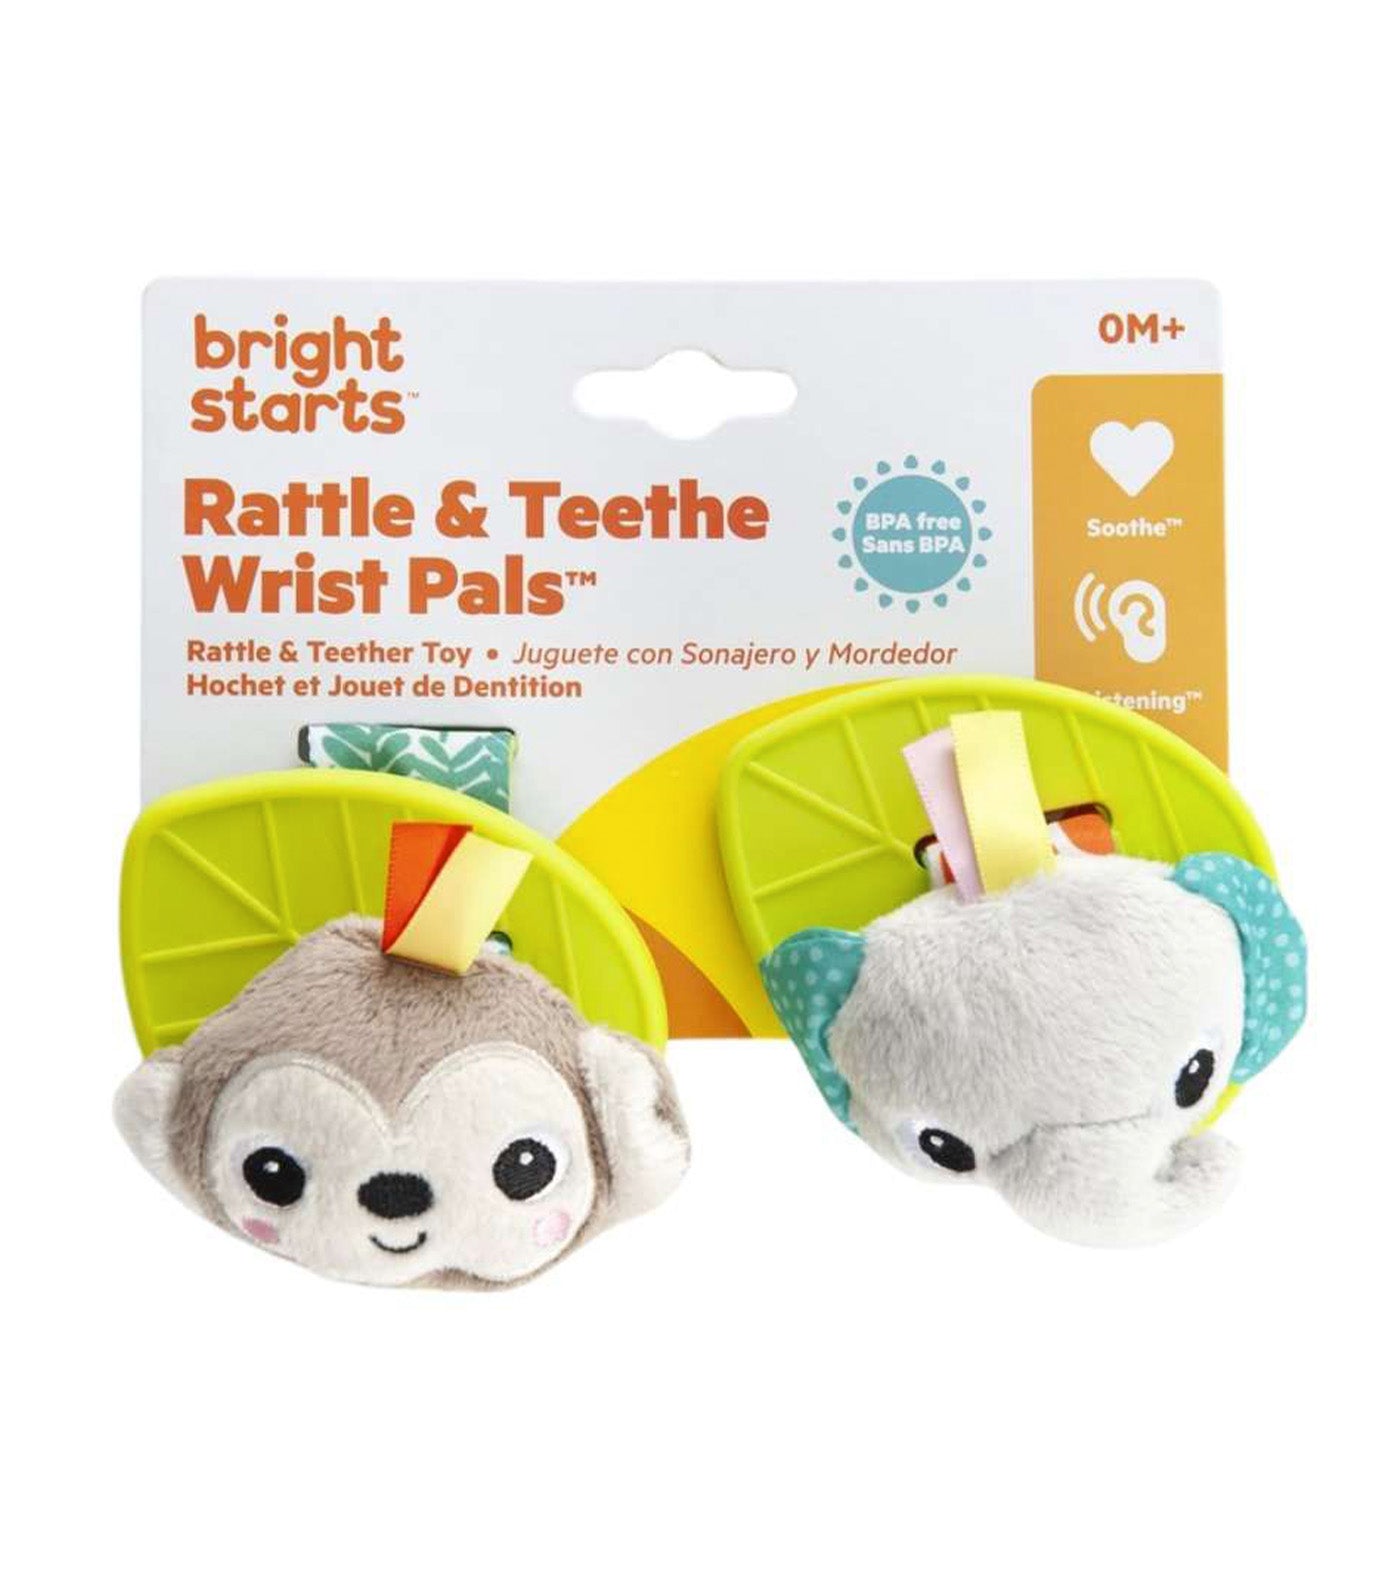 Bright Starts Rattle & Teethe Wrist Pals Toy, Monkey, and Elephant